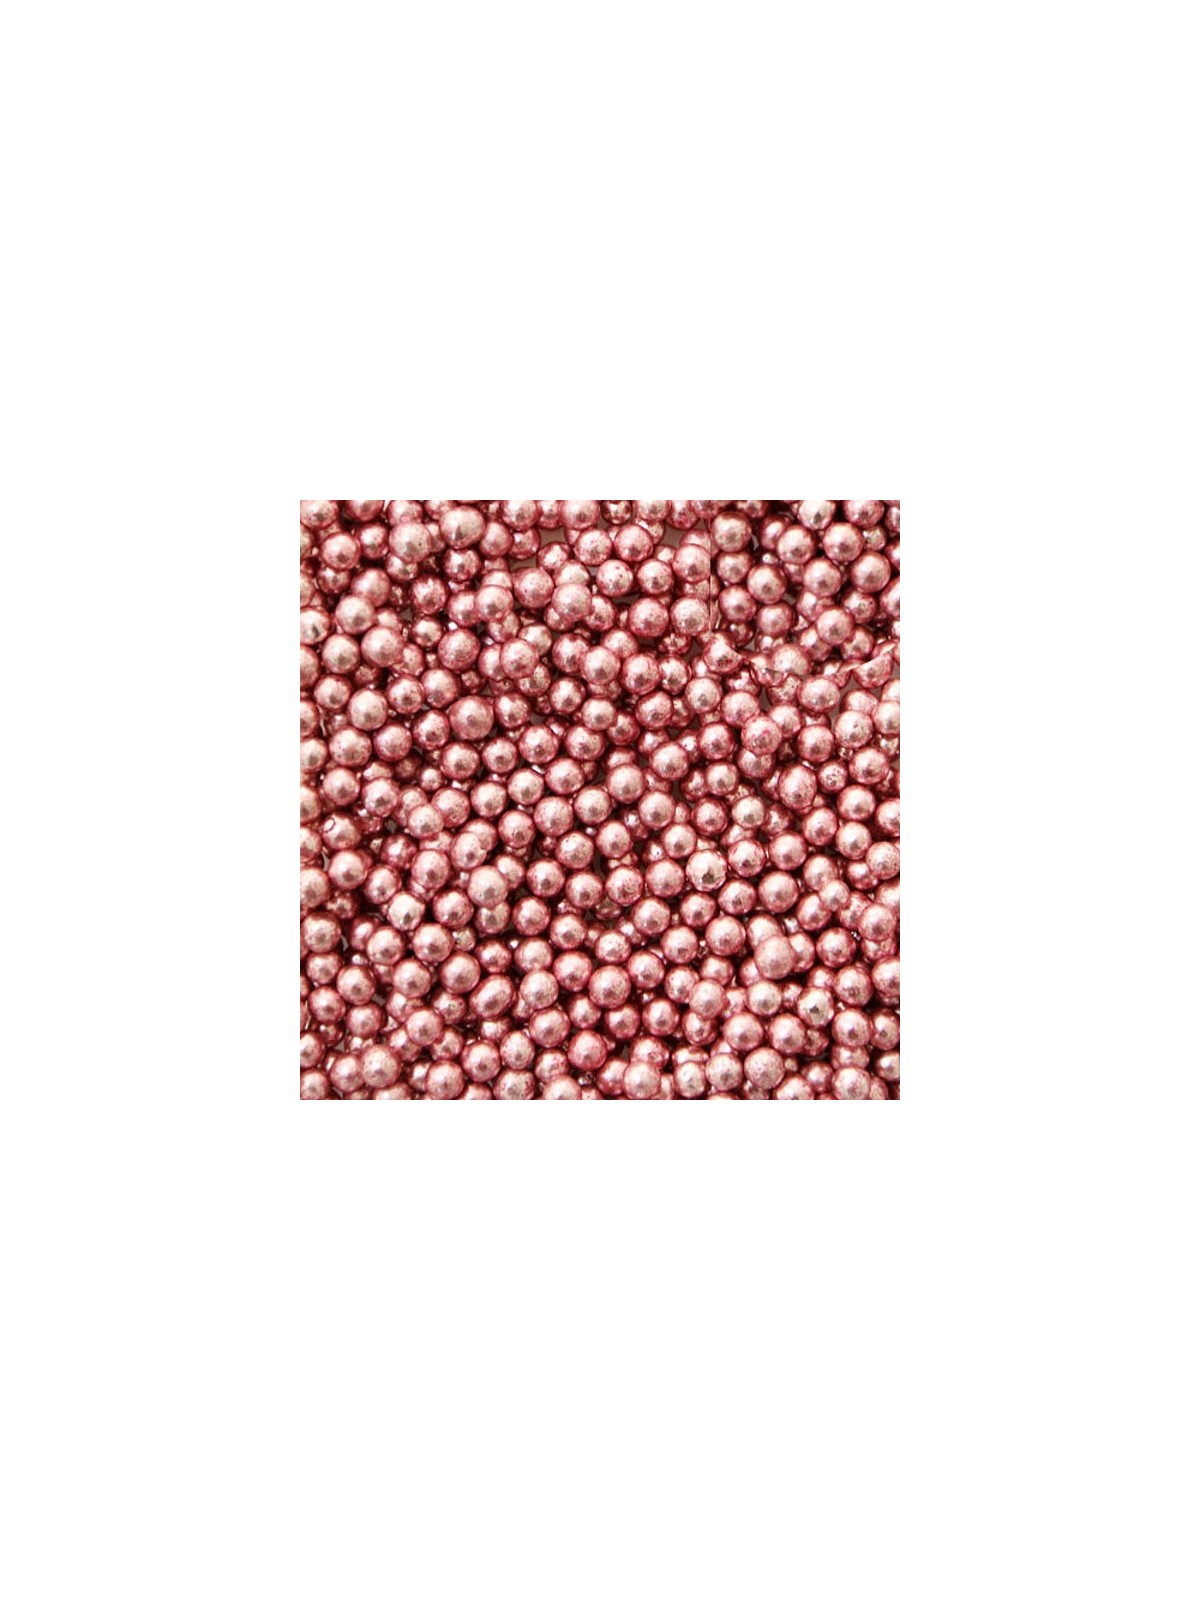 Sugar pearls 3-4mm - metallic old pink - 100g